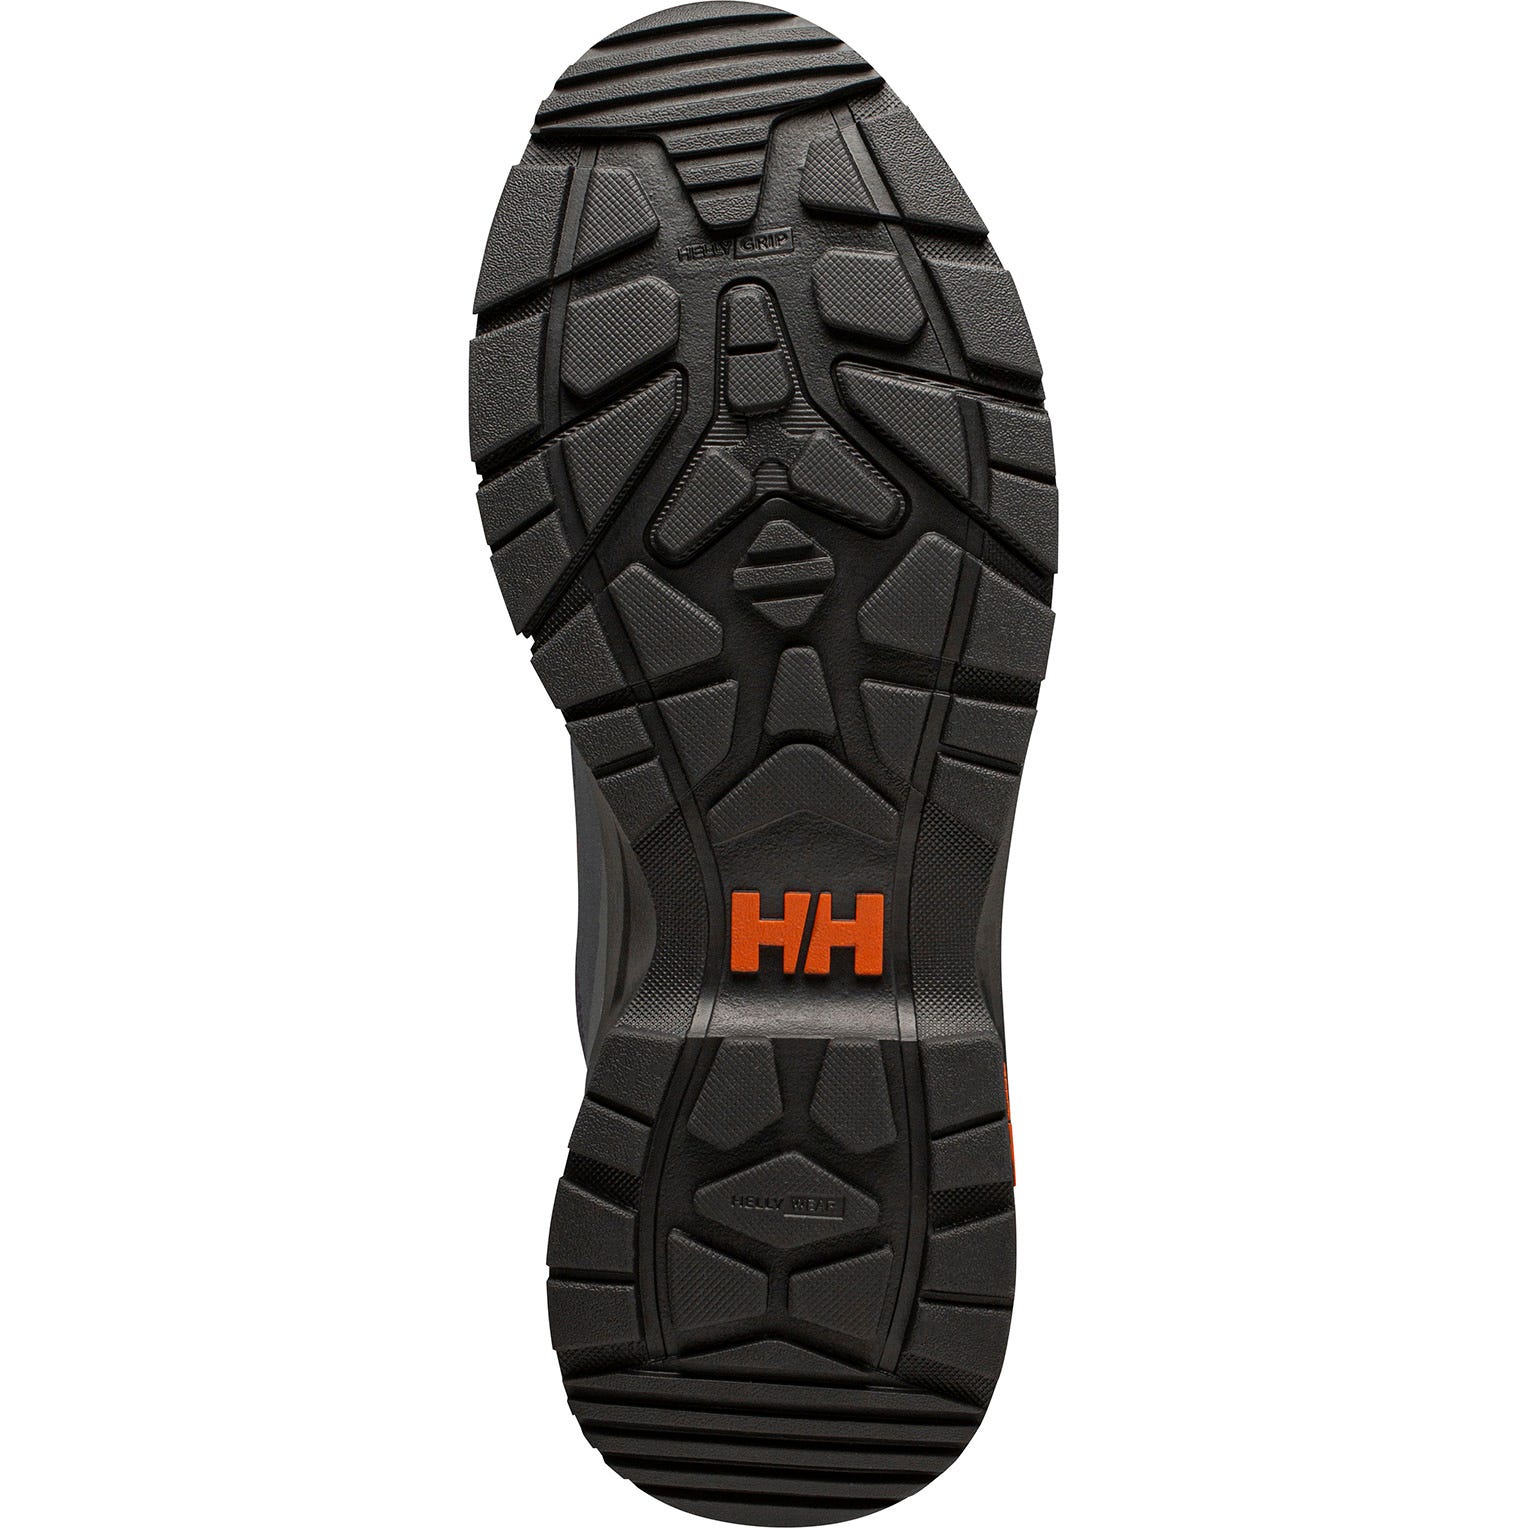 Helly Hansen Men's Cascade Mid HT Hiking Sneaker Boot